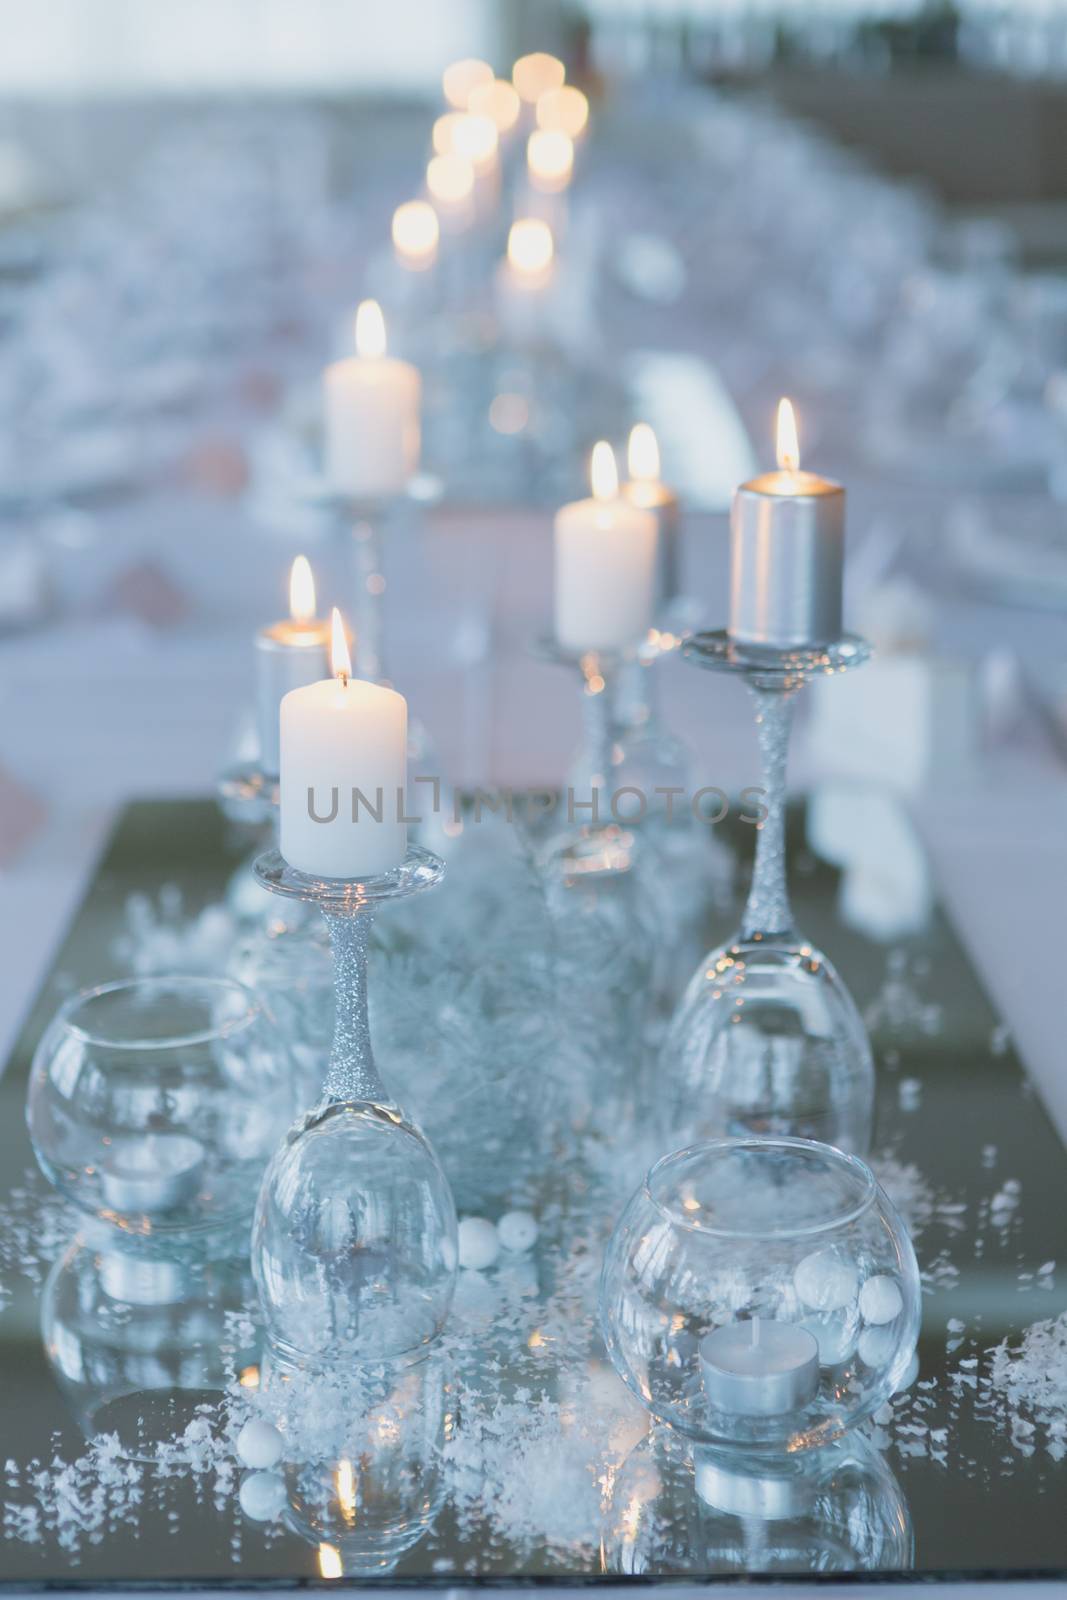 decorated wedding table by sarymsakov